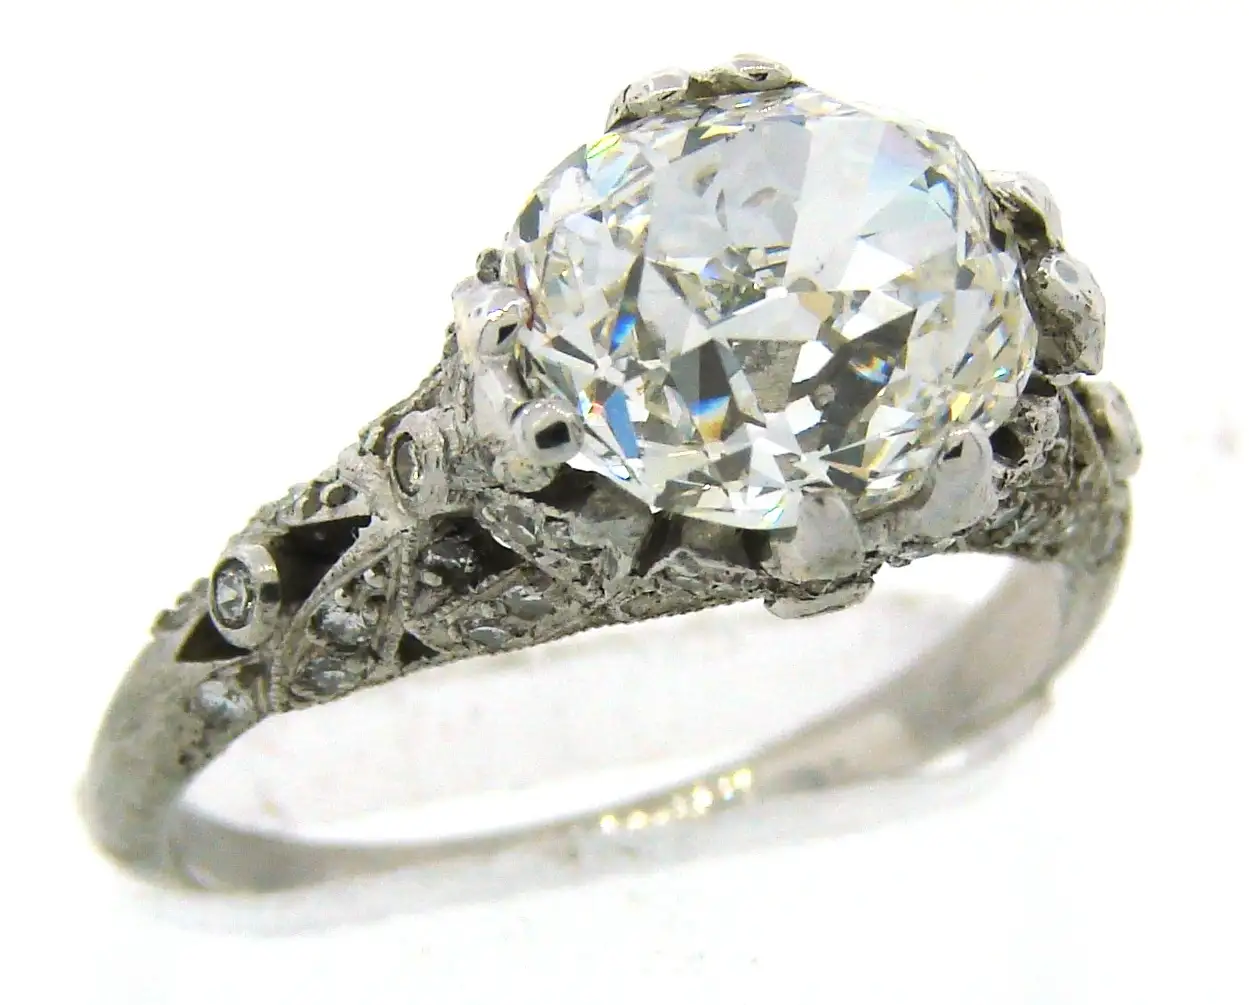 Cushion-Cut-Diamond-Platinum-Ring-Art-Deco-circa-1920s-3.02-carat-GIA-G-SI1-8.webp